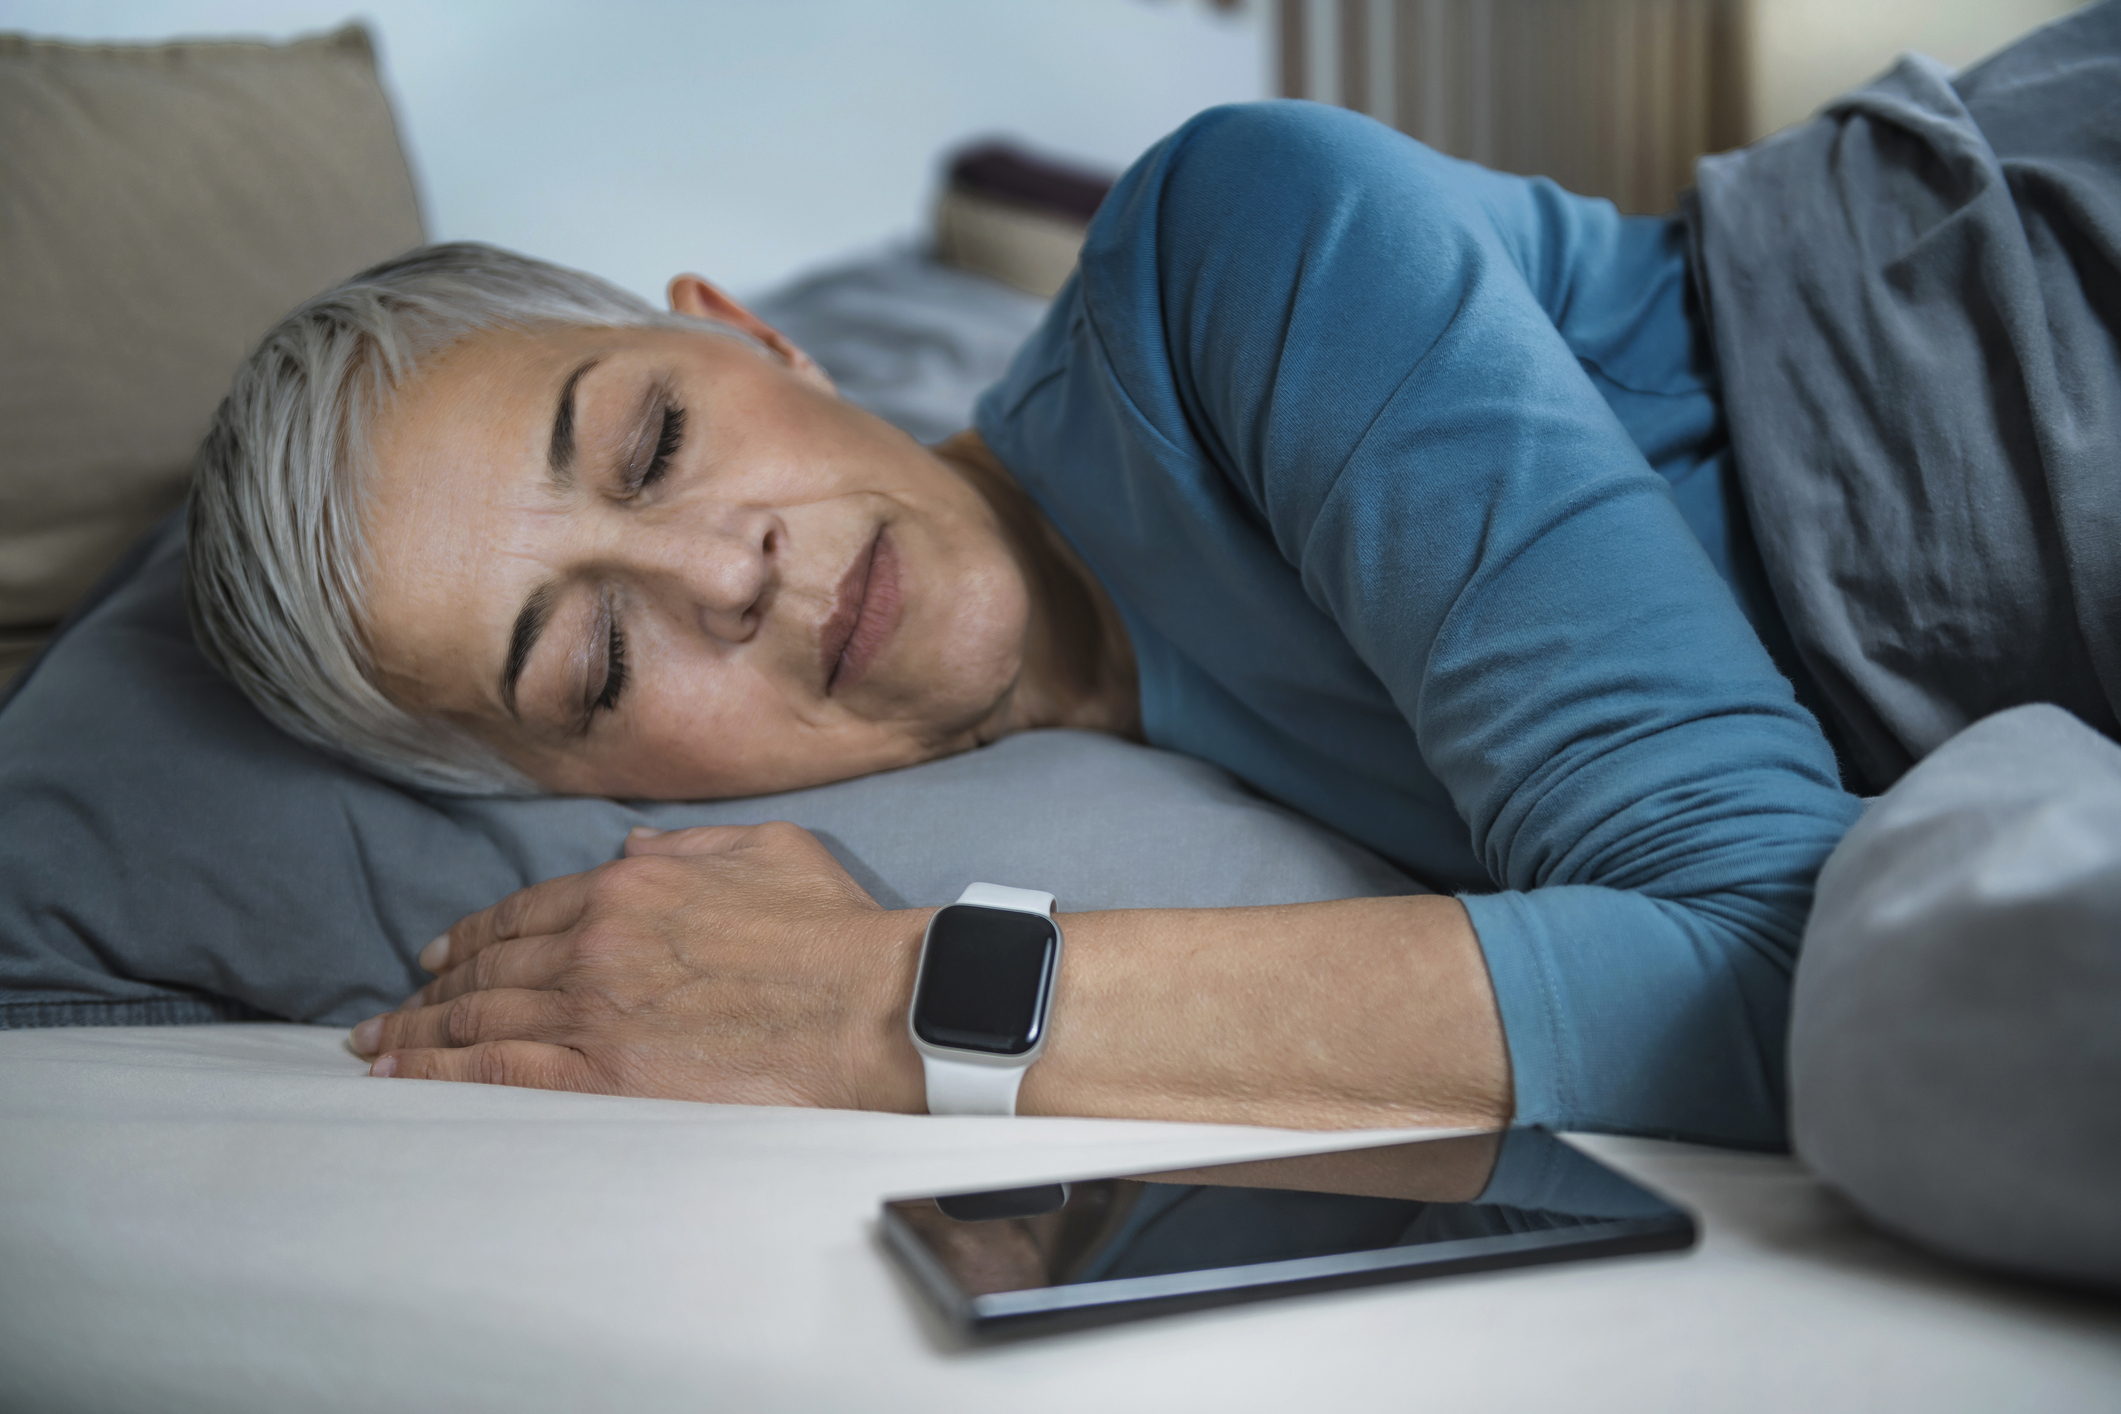 Old woman using a sleep app to help her sleep soundly